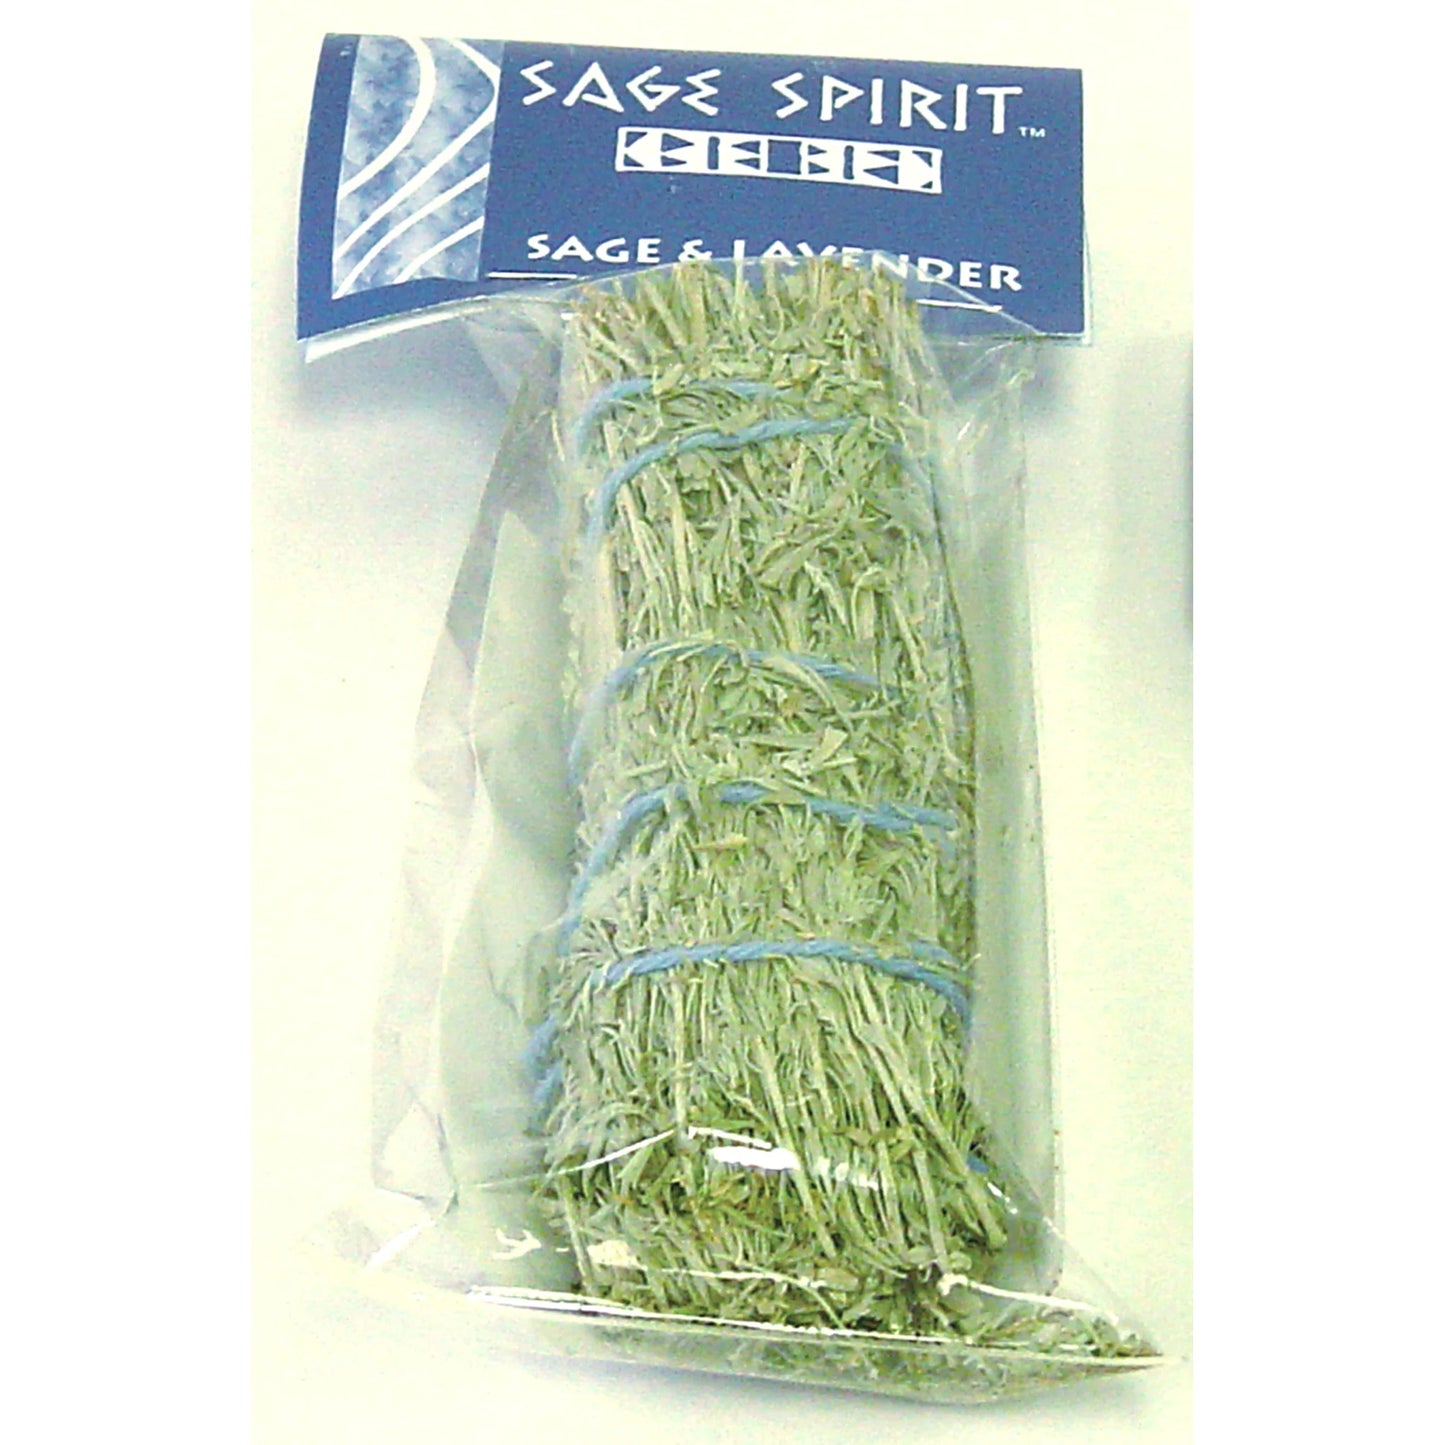 Sage Spirit - Smudge Sticks, Sage & Lavender